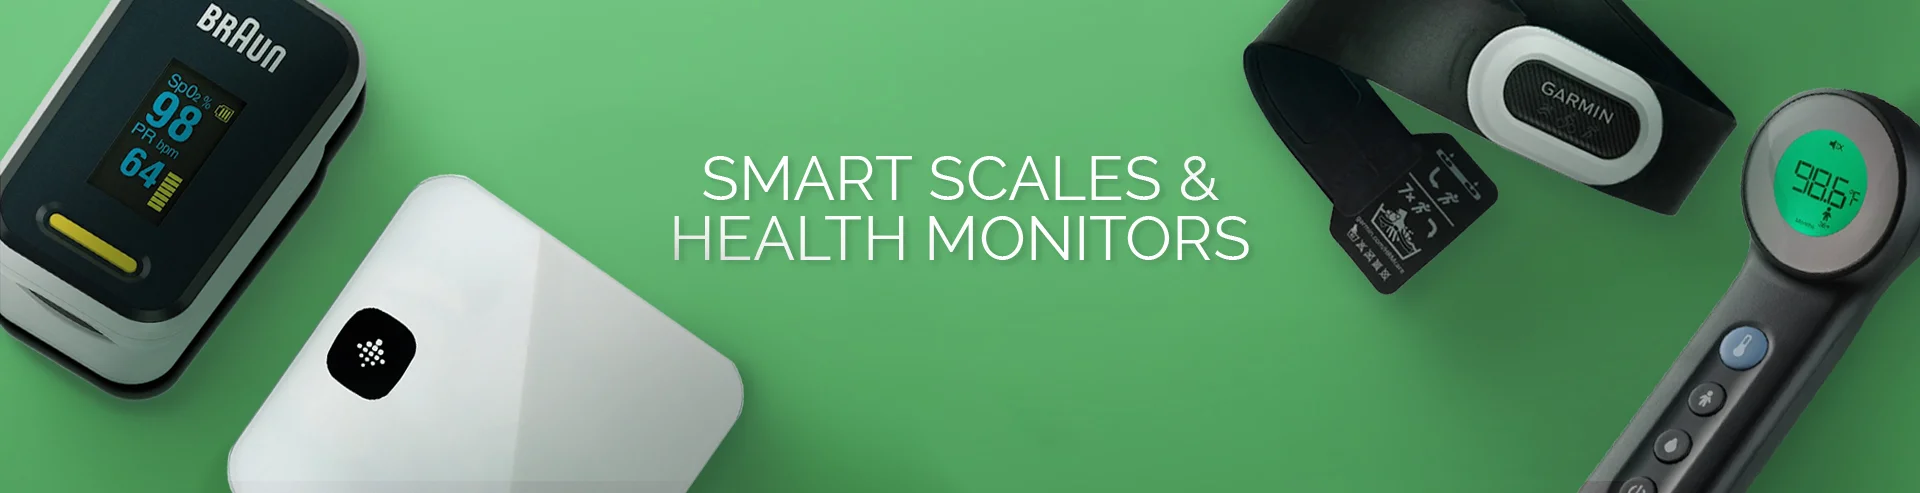 VM-Hero-Smart Scales & Health Monitors-1920x493.webp